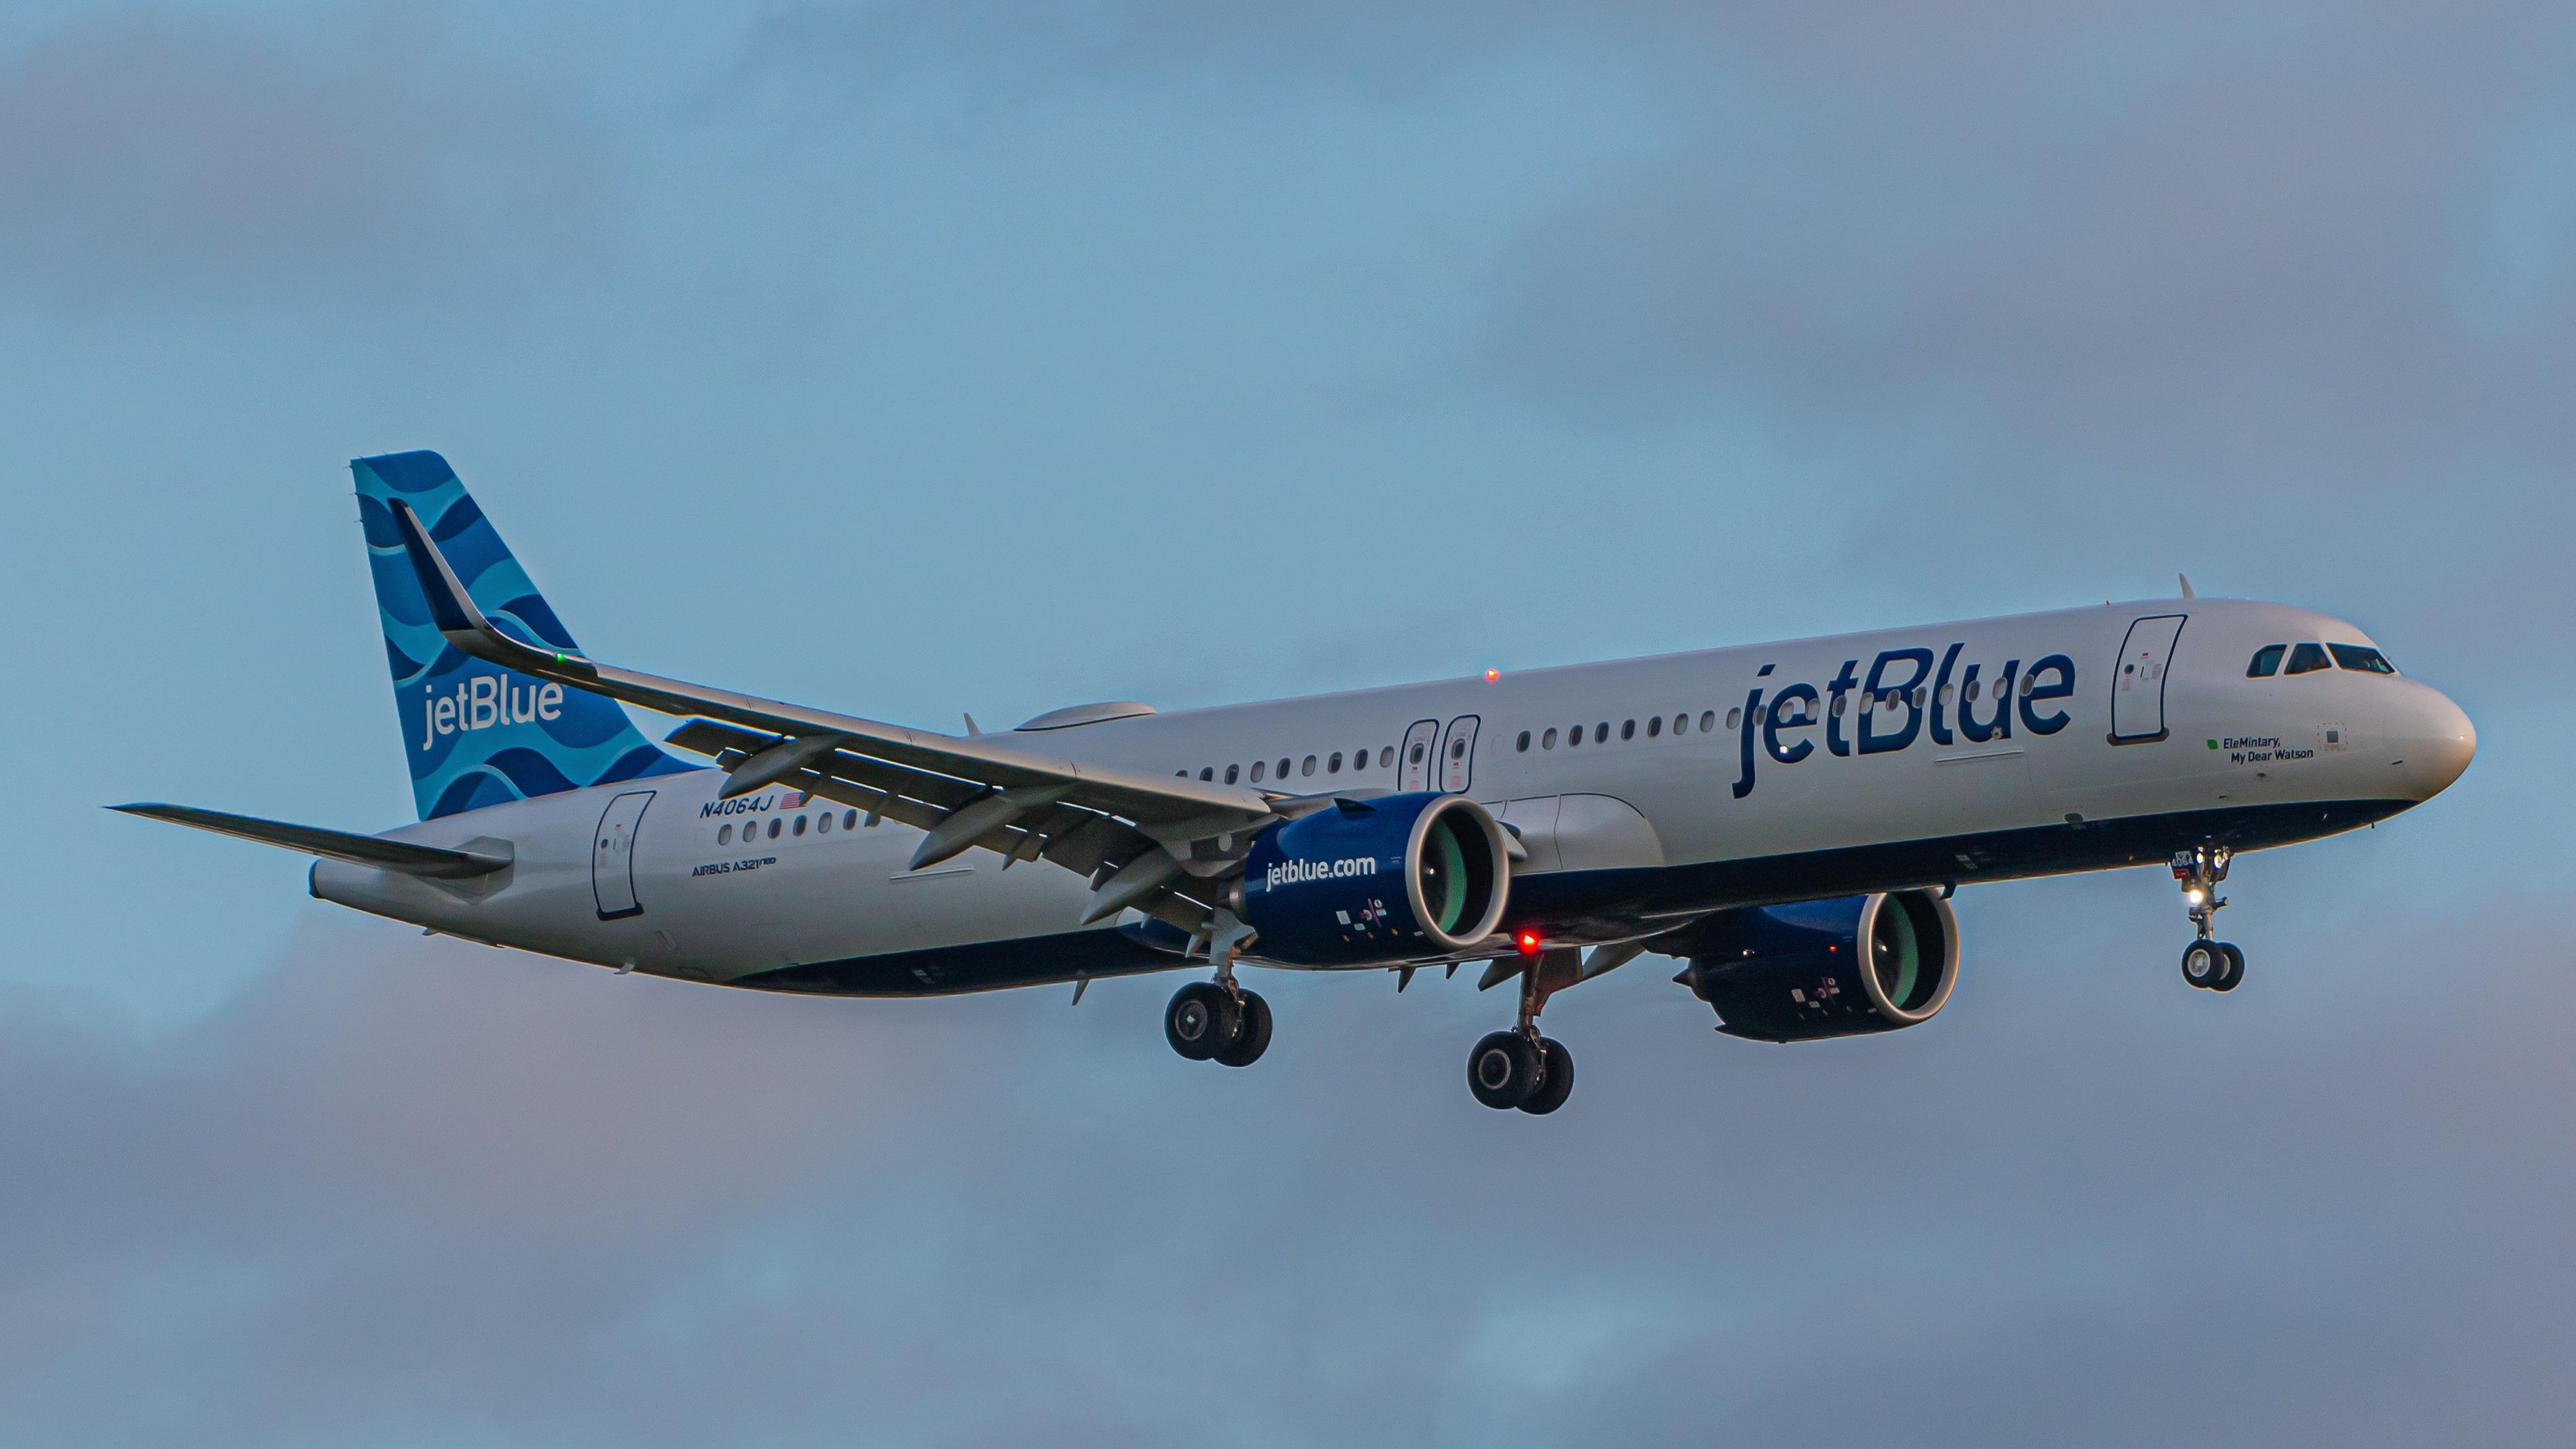 JetBlue Airbus A321LR Landing At London Heathrow Airport